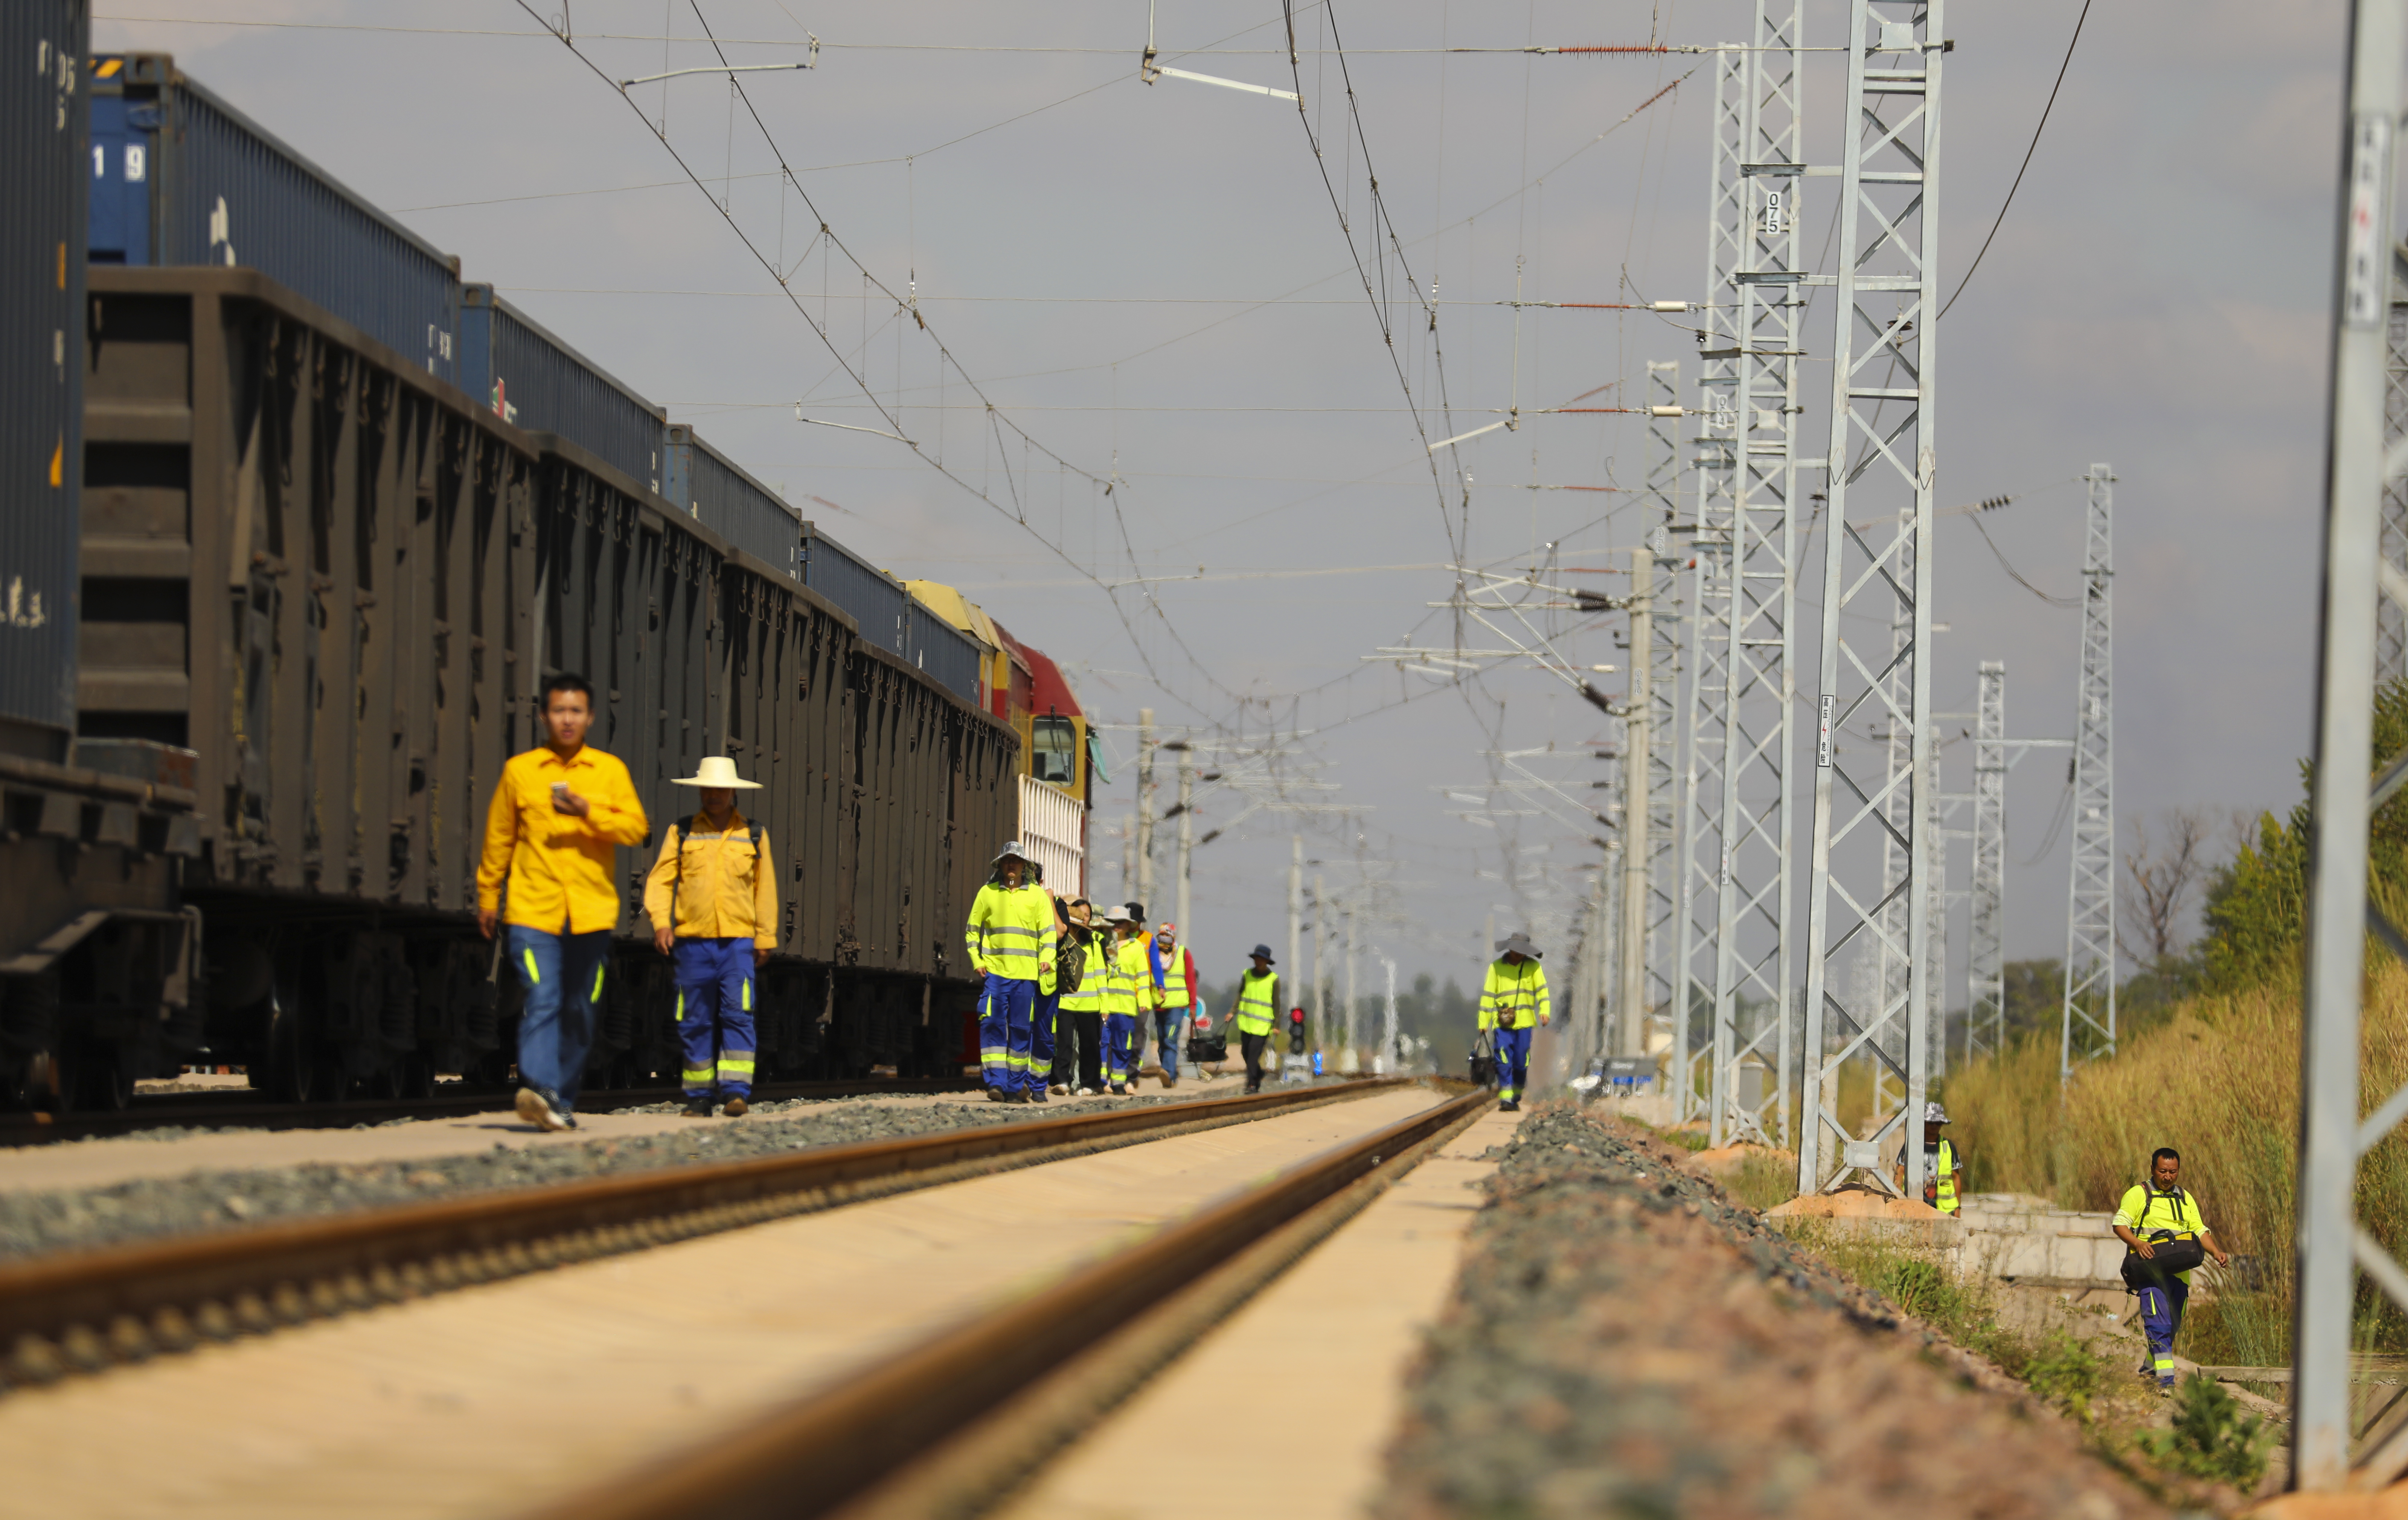 Thai-Lao-Singapore Railway: Catalyst for Regional Connectivity and Economic Development